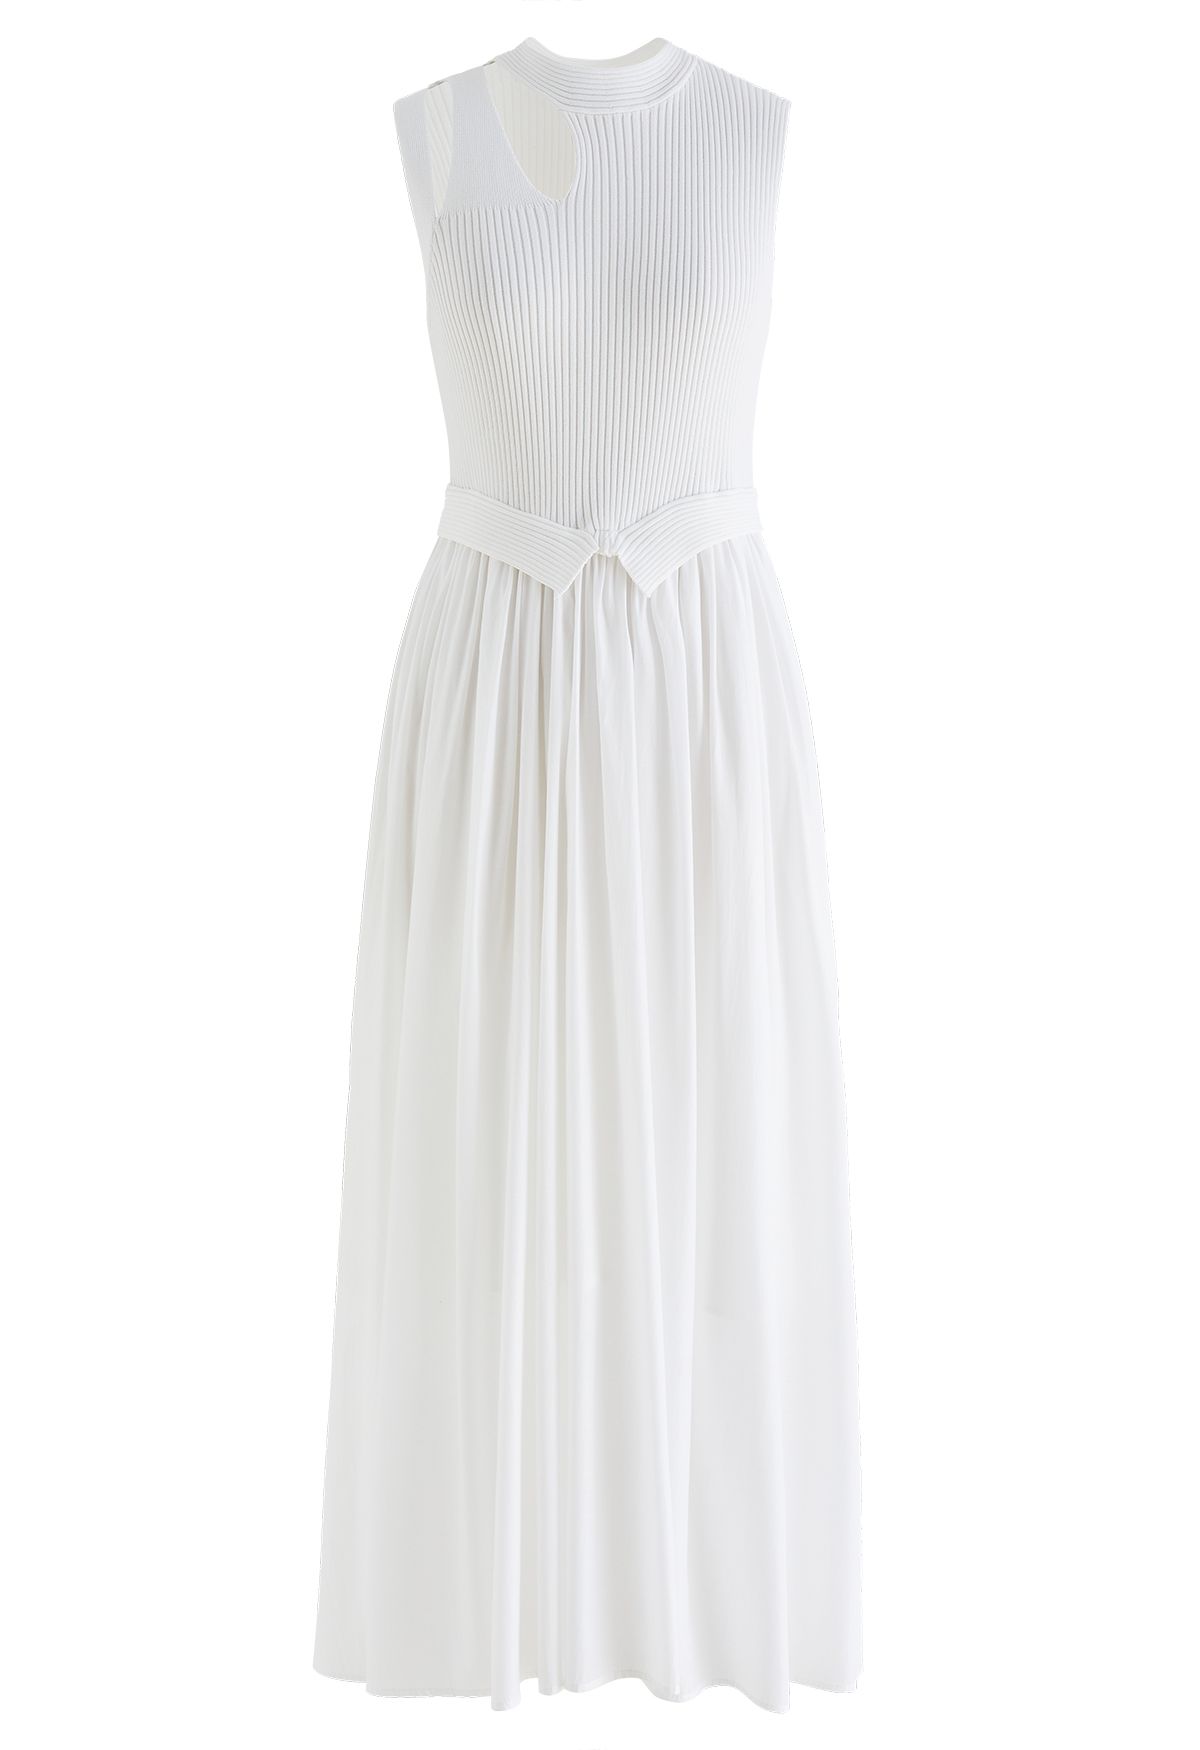 Cutout Neckline Knit Spliced Dress in White - Retro, Indie and Unique ...